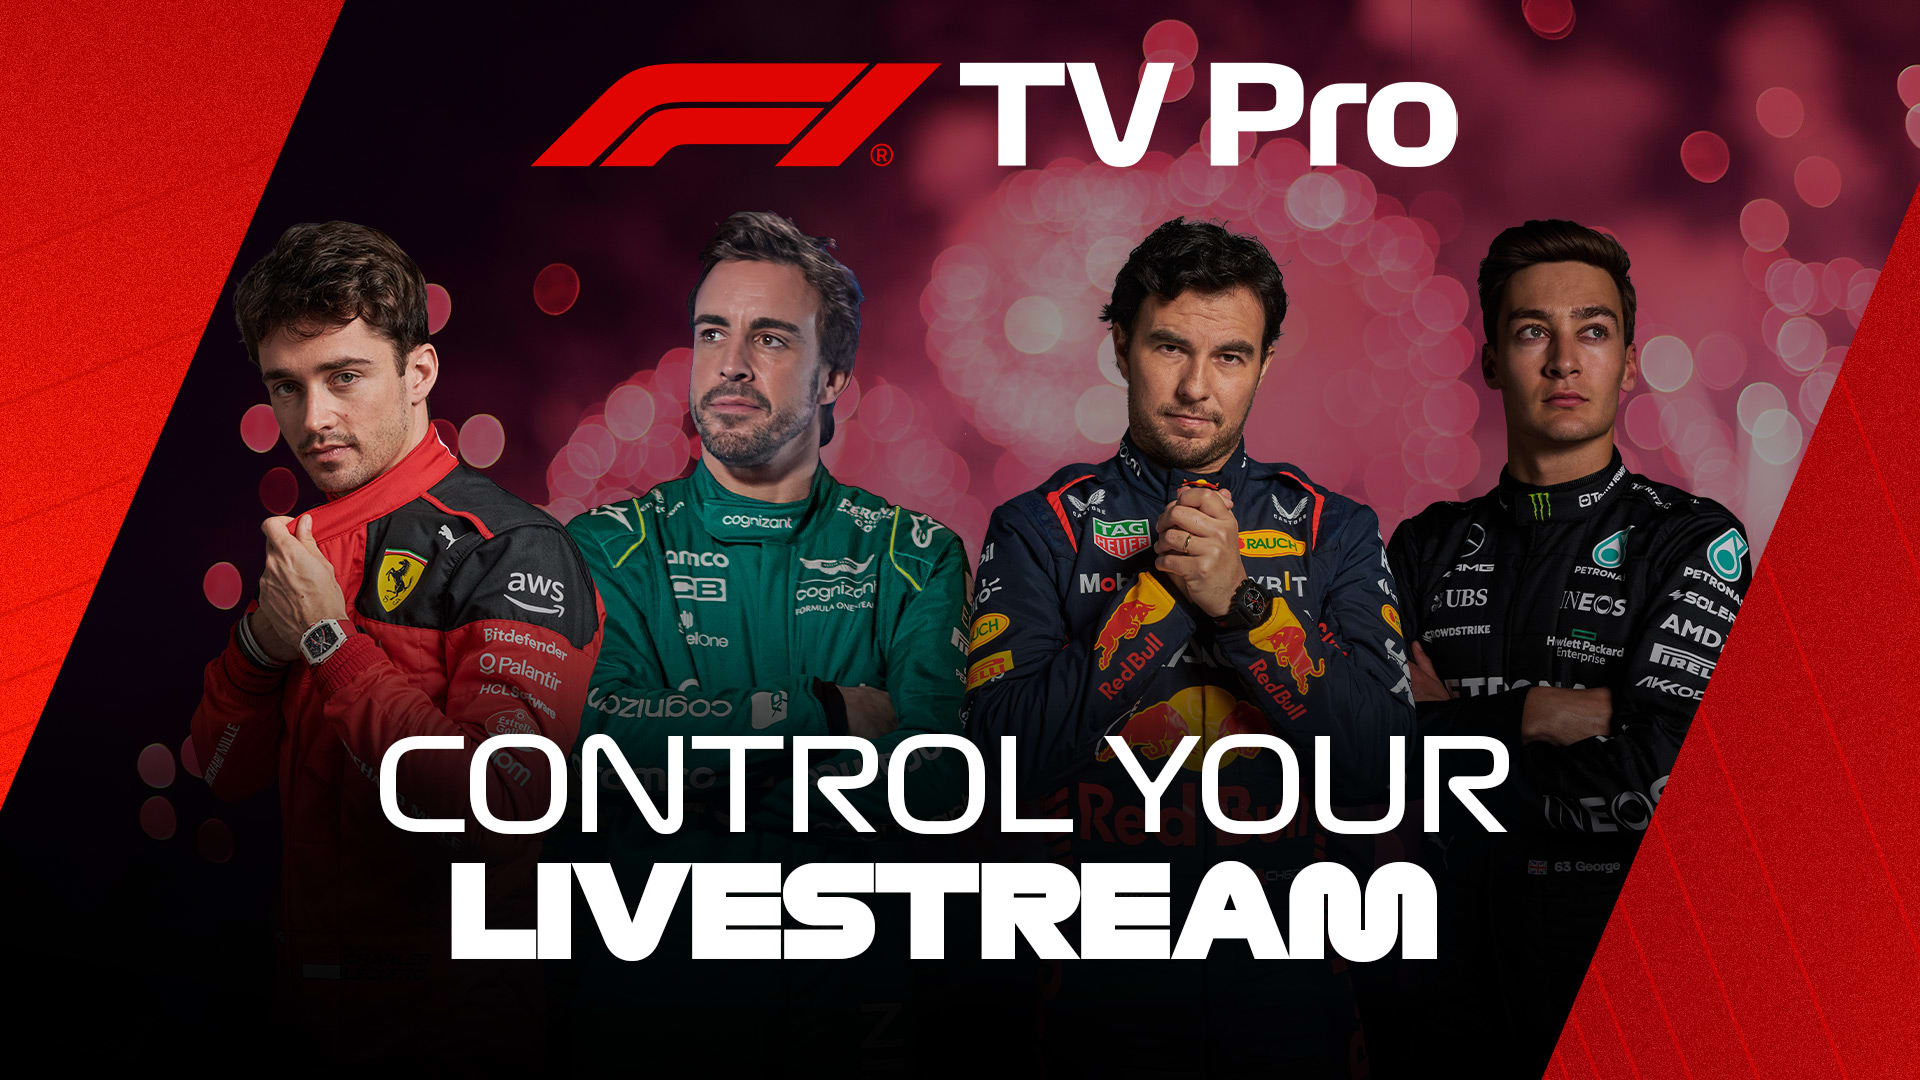 How to stream the 2023 Monaco Grand Prix on F1 TV Pro Formula 1®